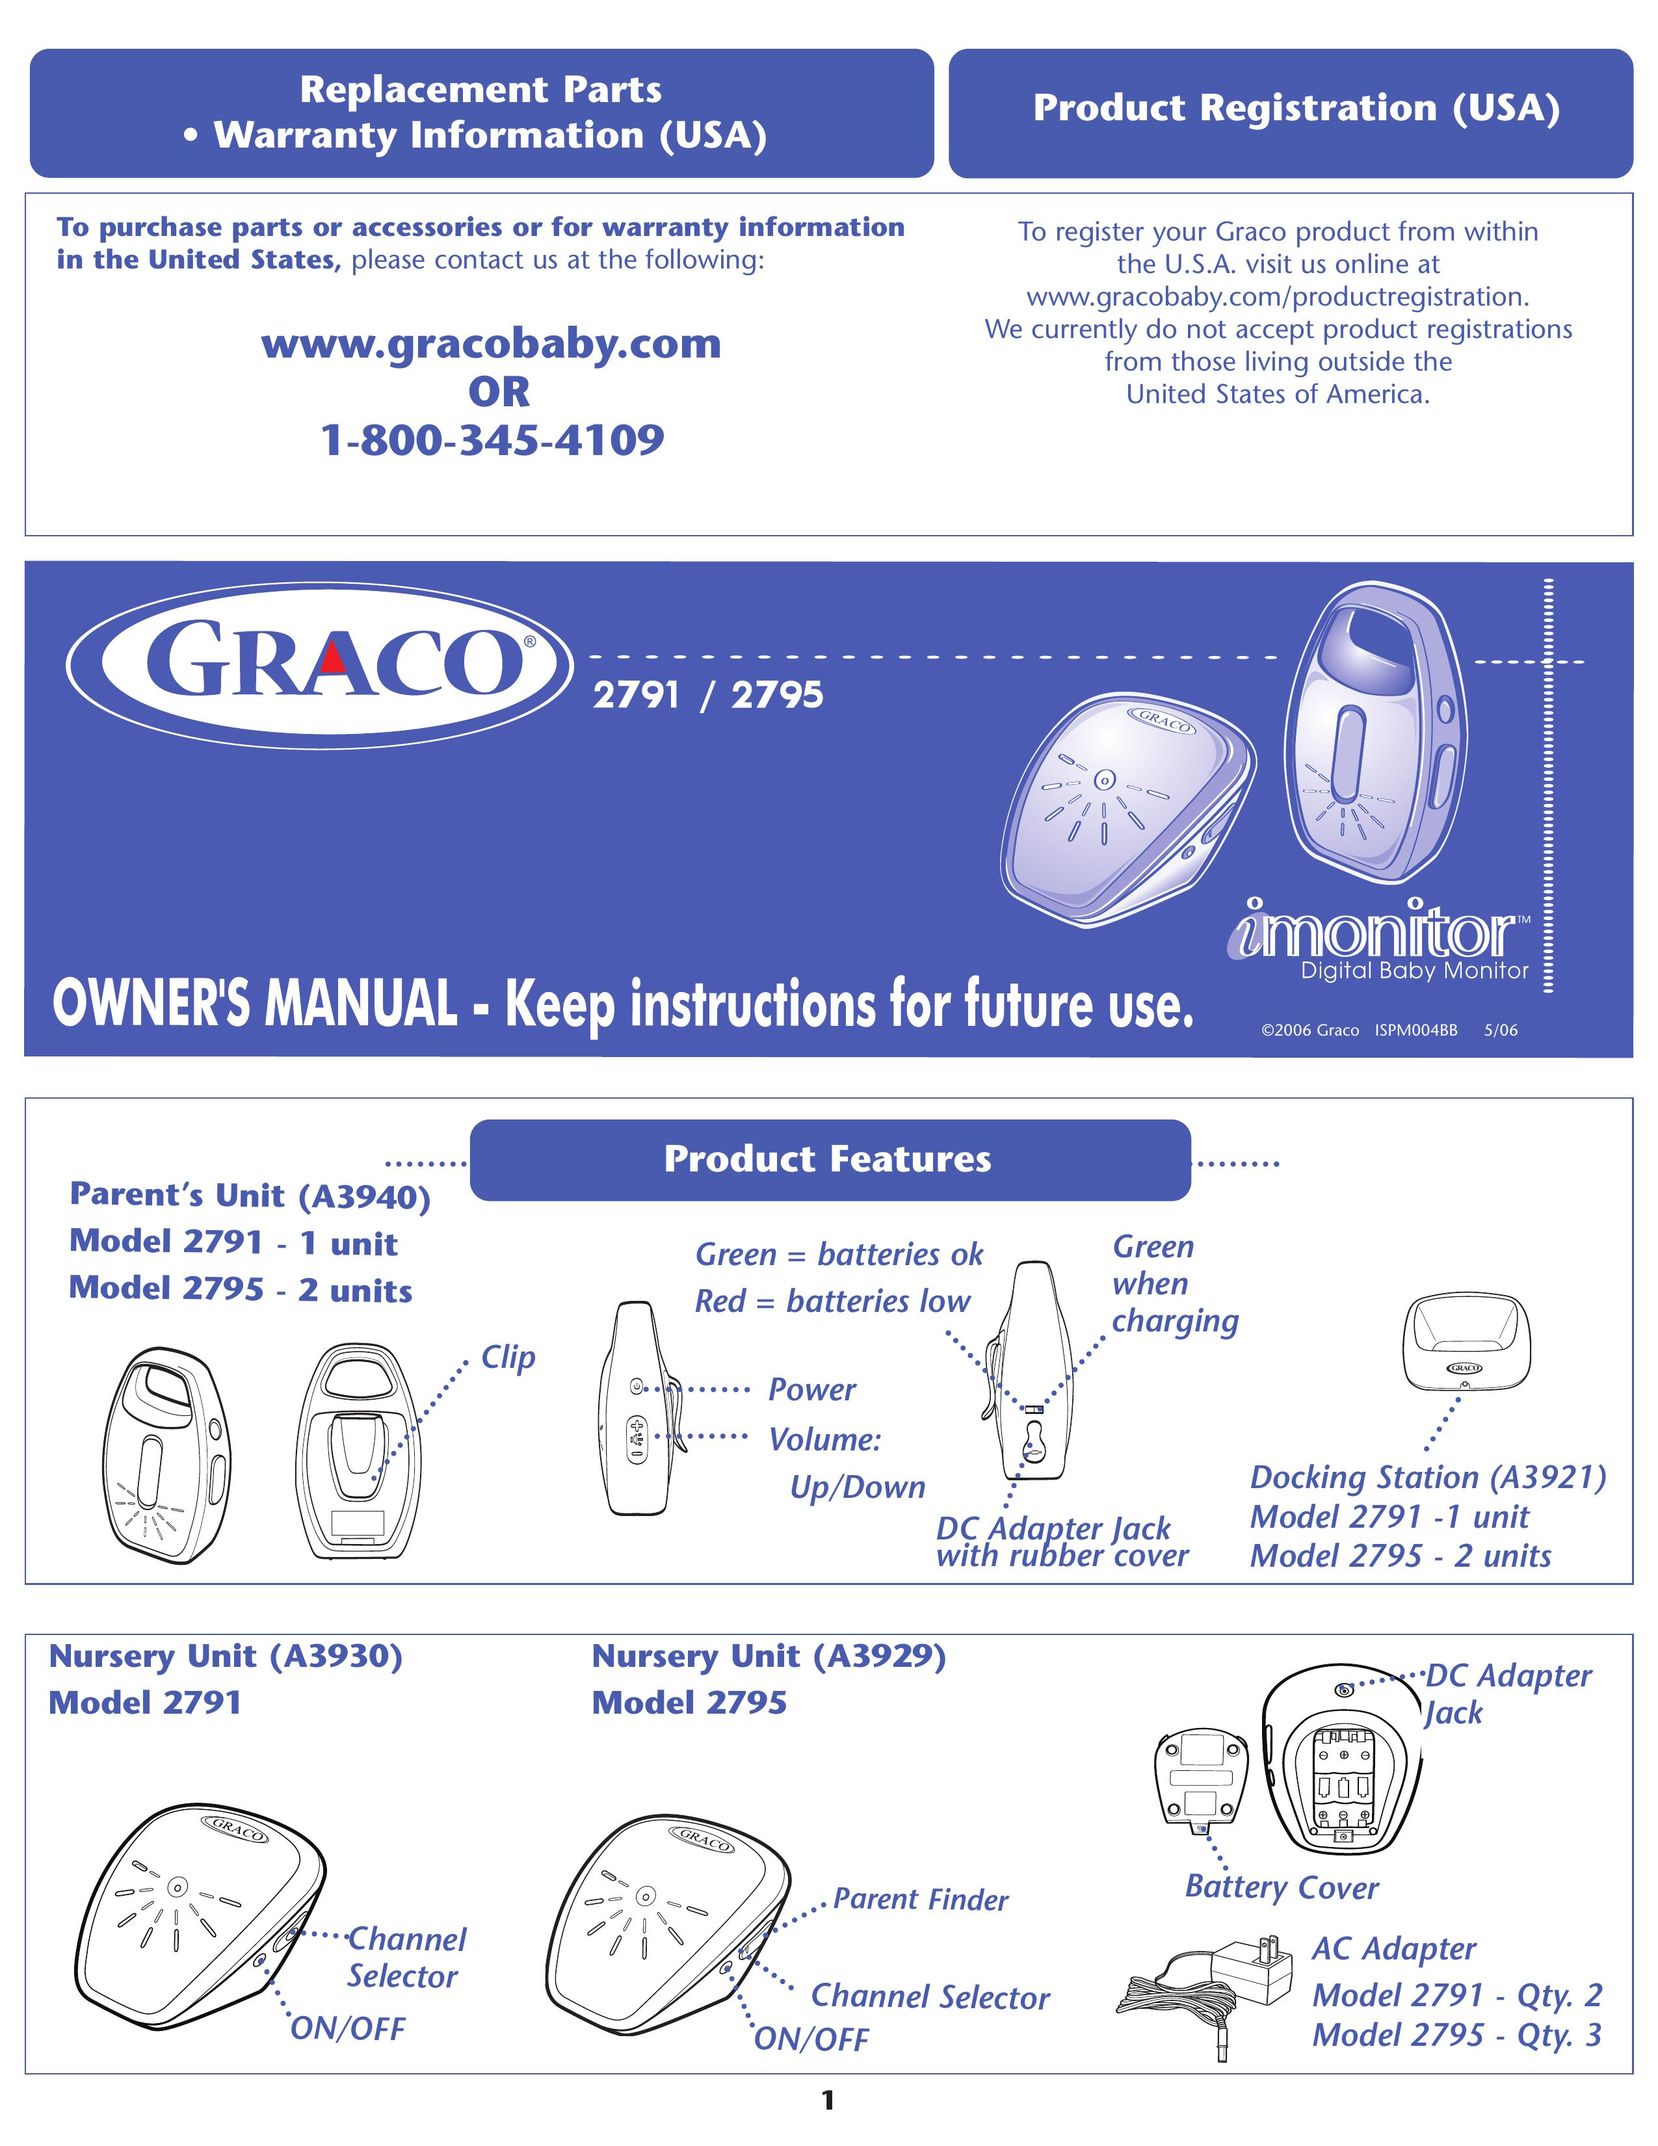 Graco 2795 Baby Monitor User Manual